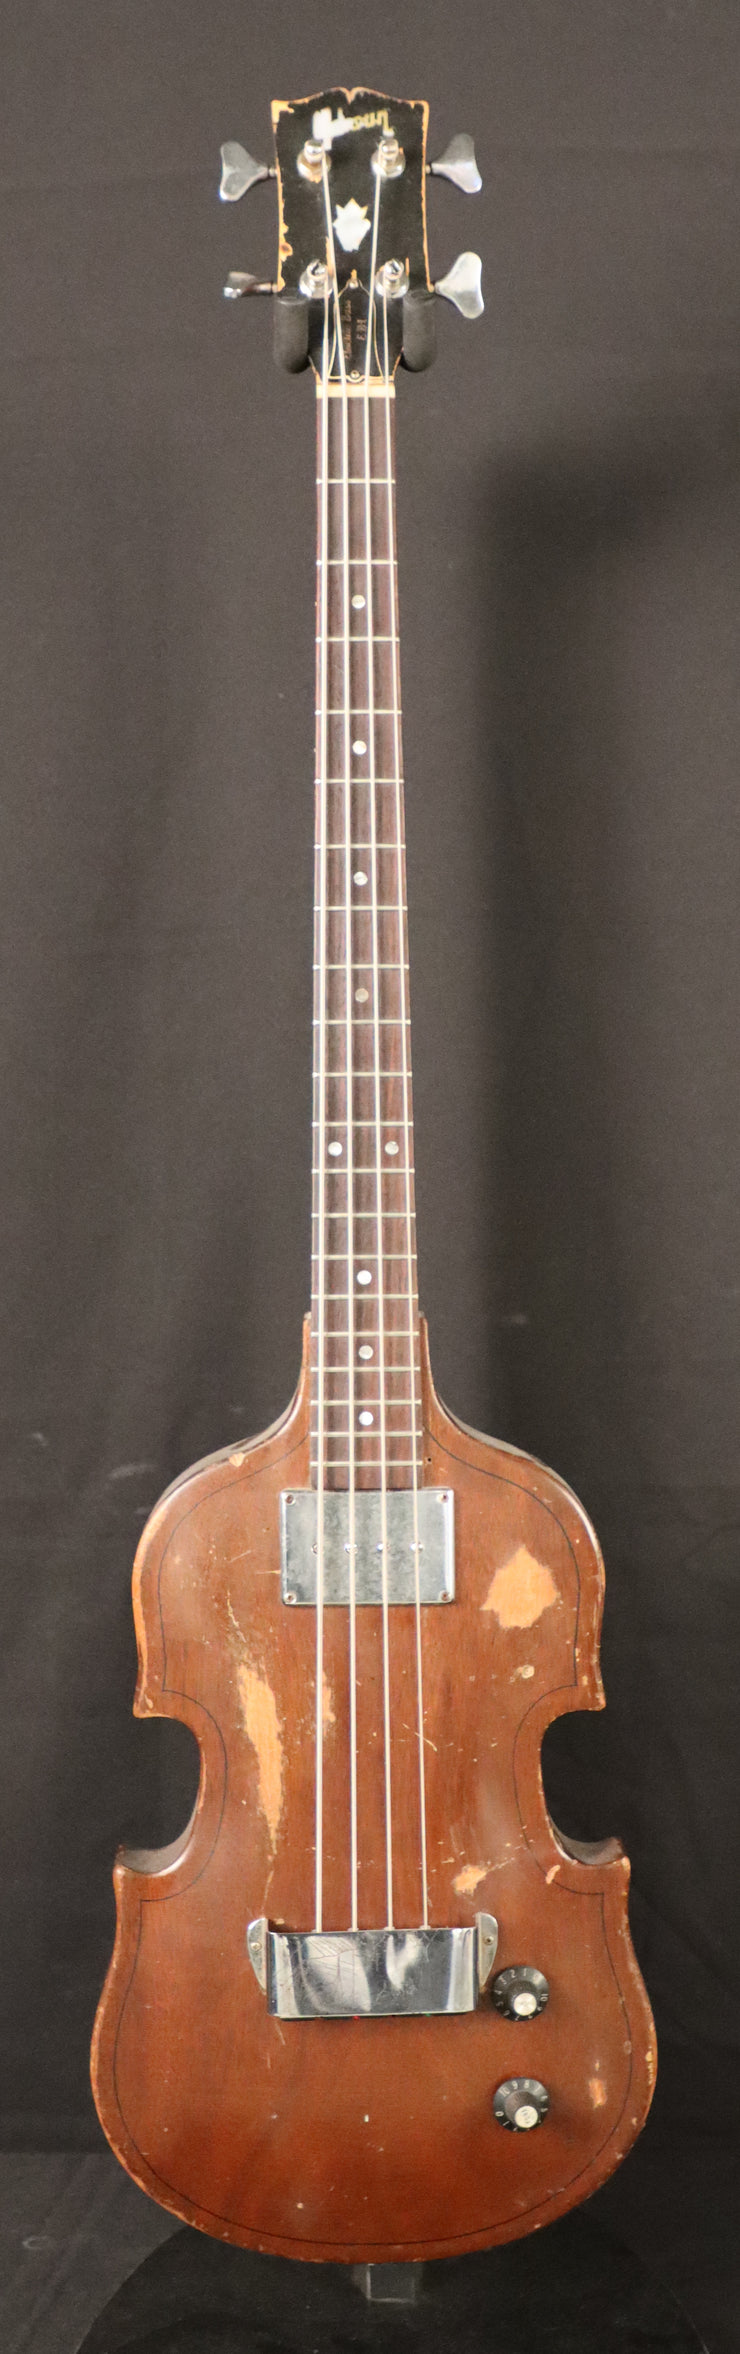 1969 Gibson EB-1 Bass